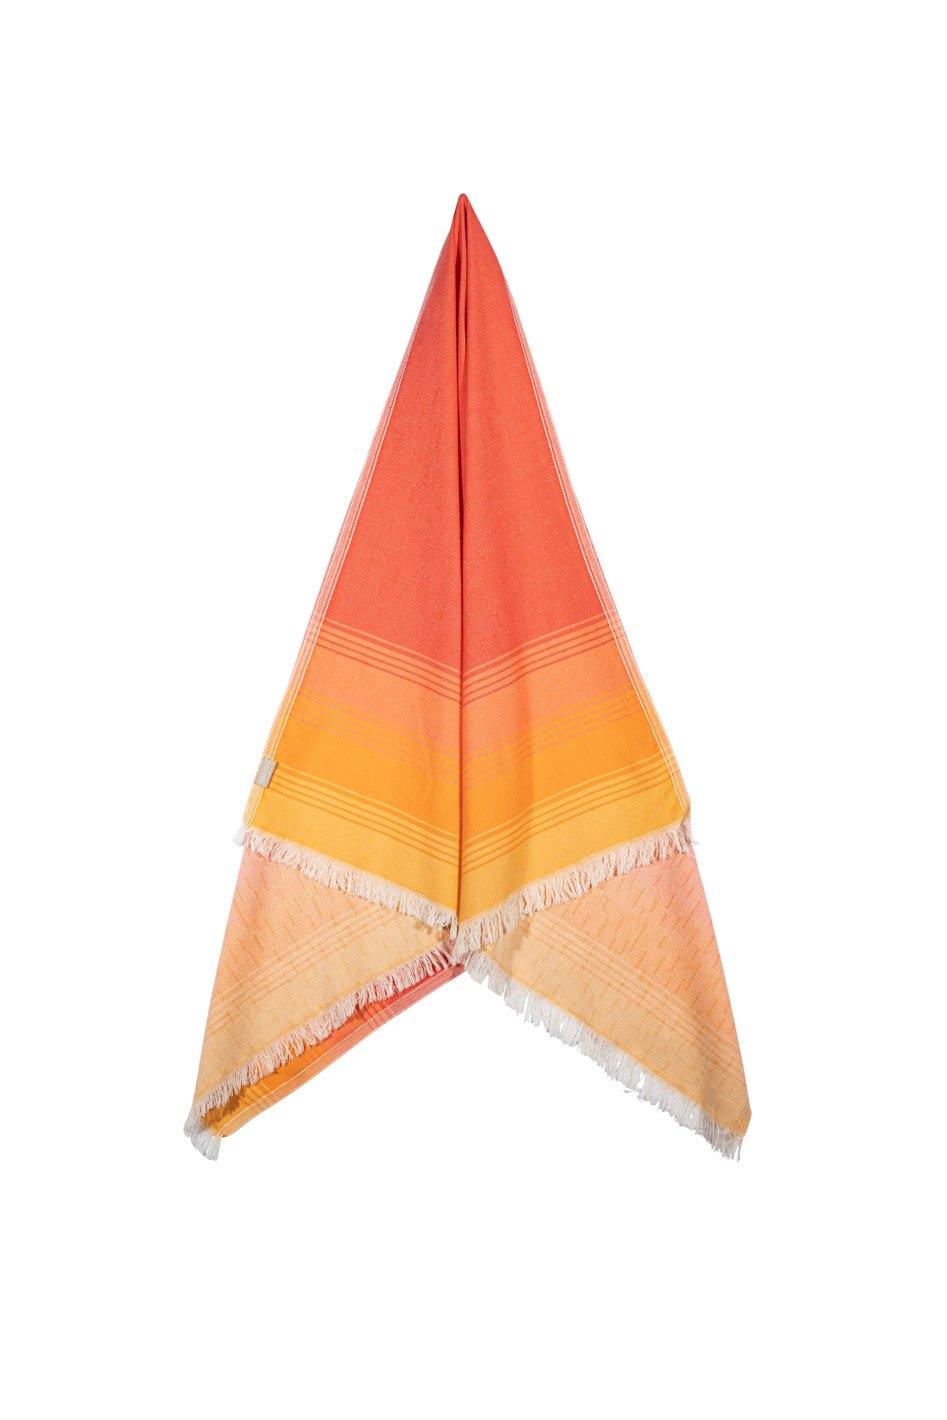 Sunset Beach towel folded, showcasing the colourful and warm orange tones and modern fringed edge.